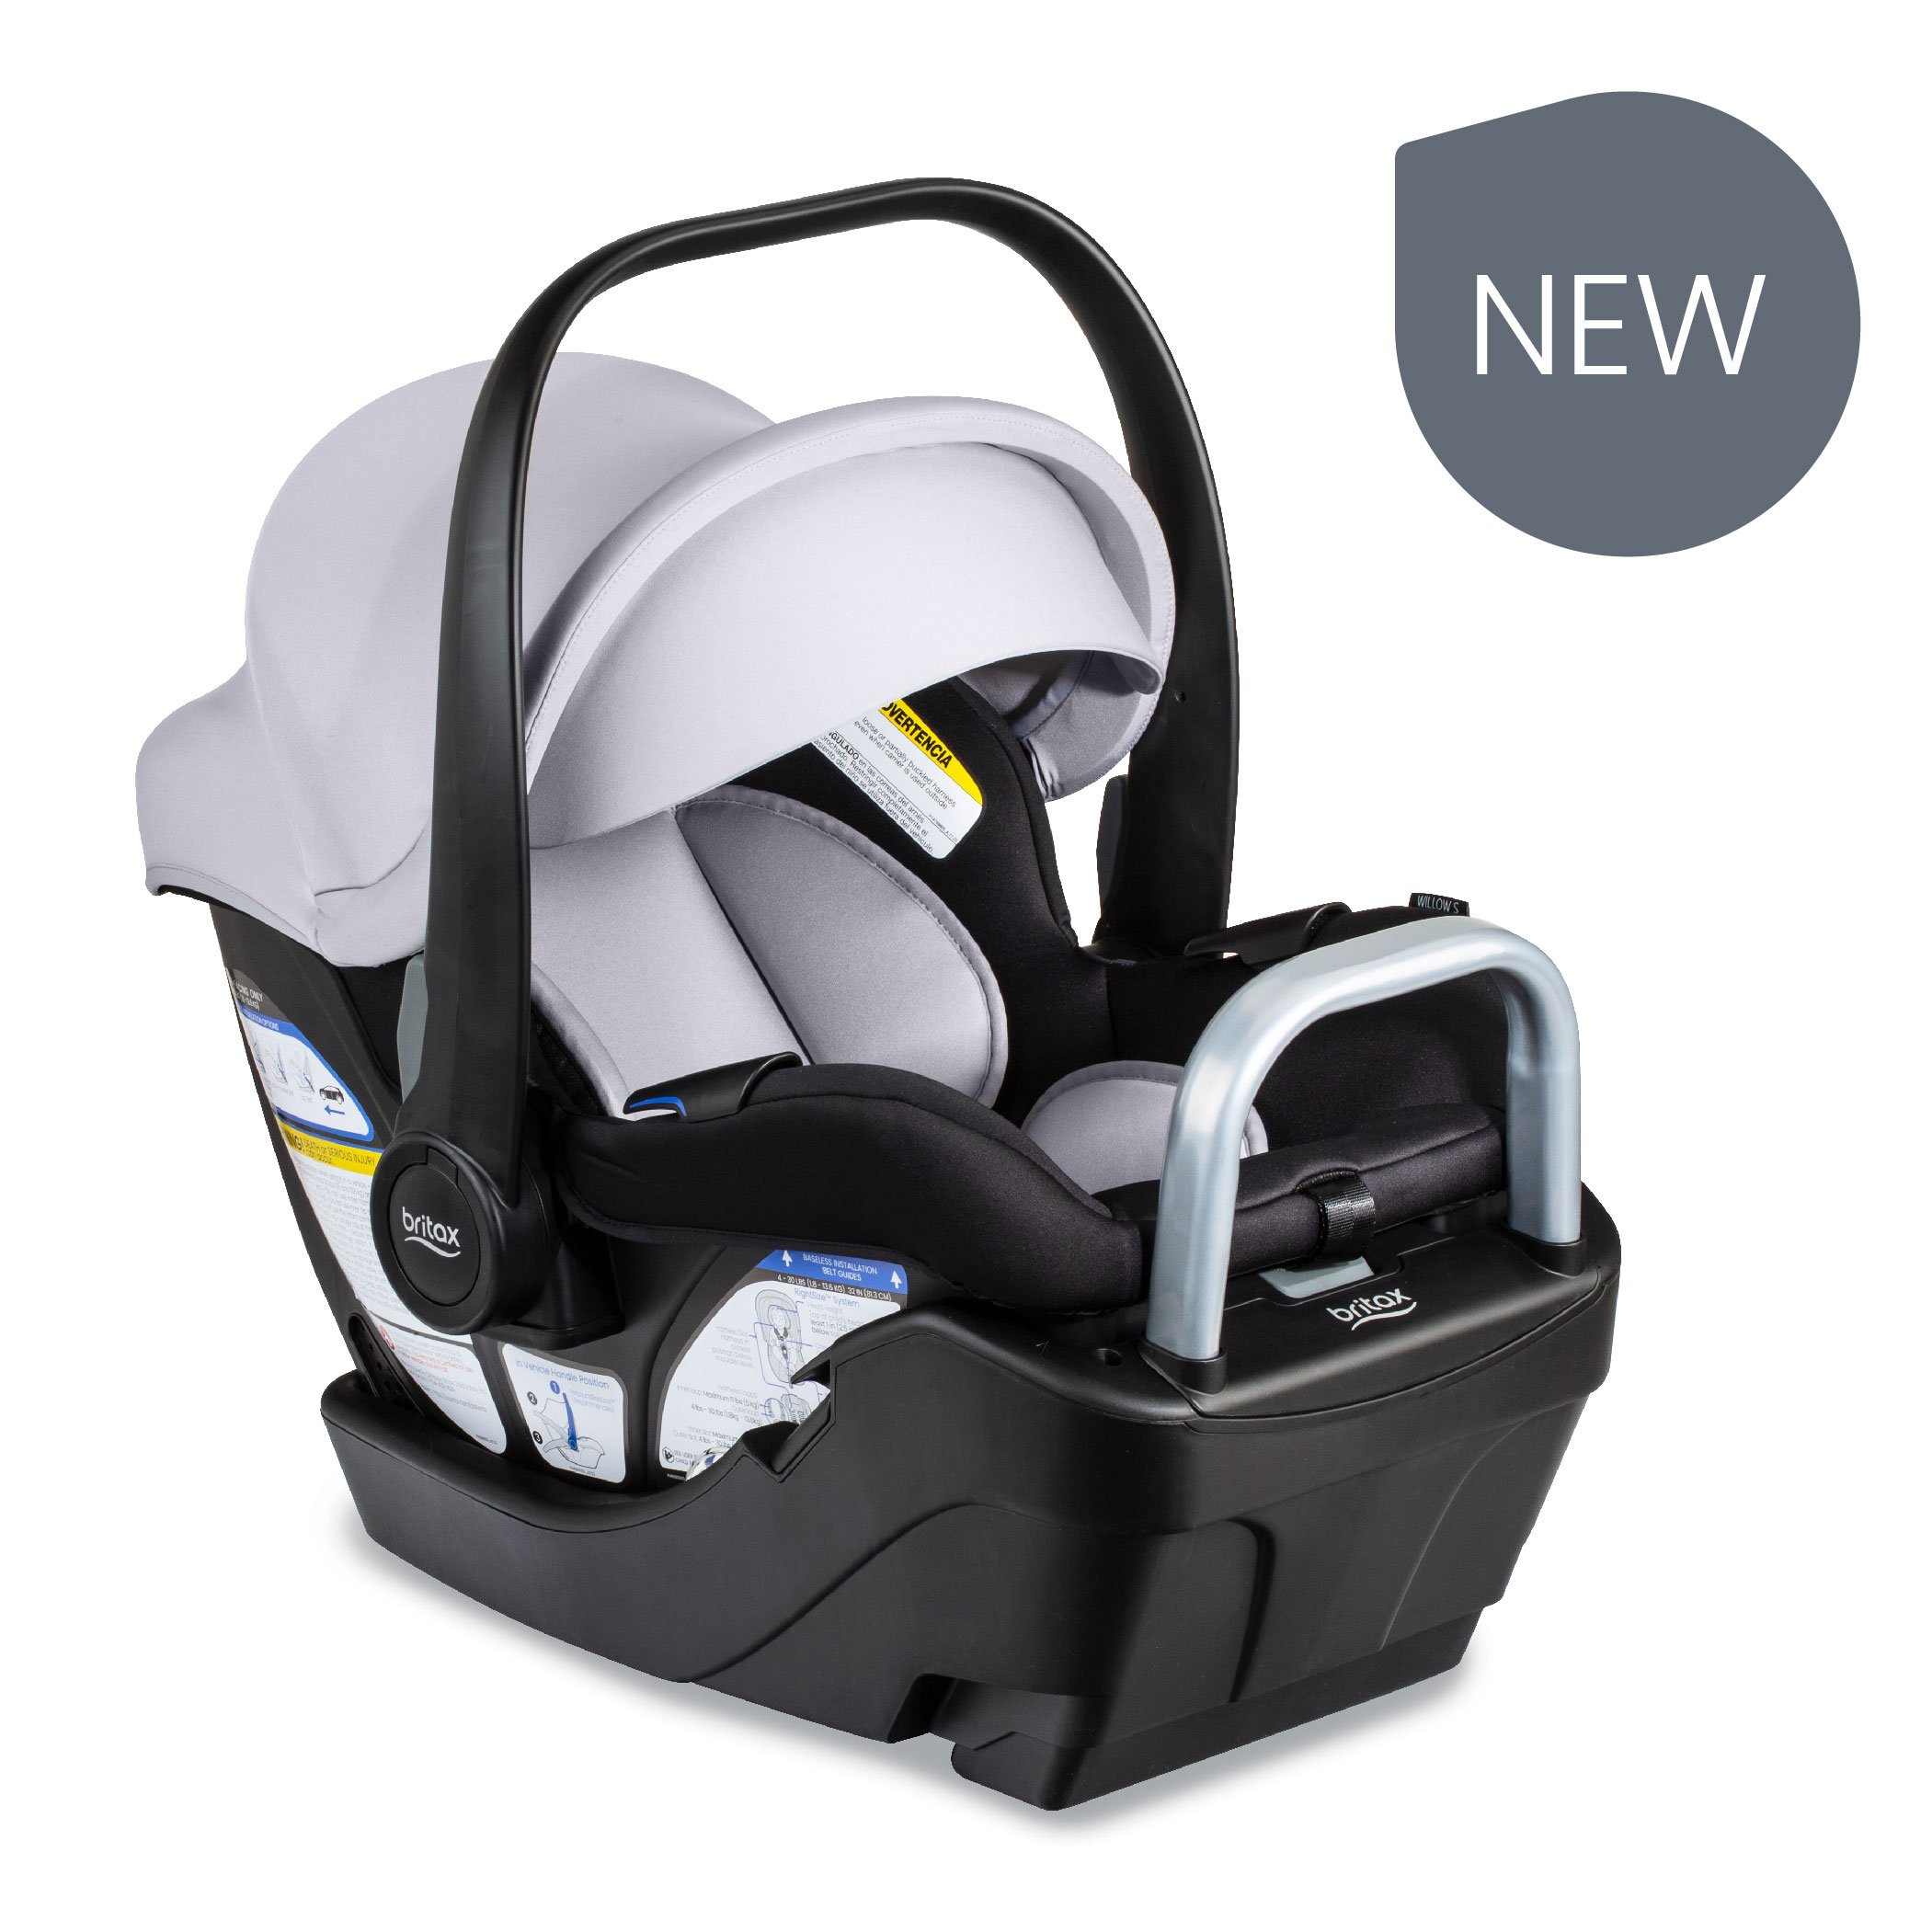 NEW Glacier Onyx Willow S Infant Car Seat   (Copy)